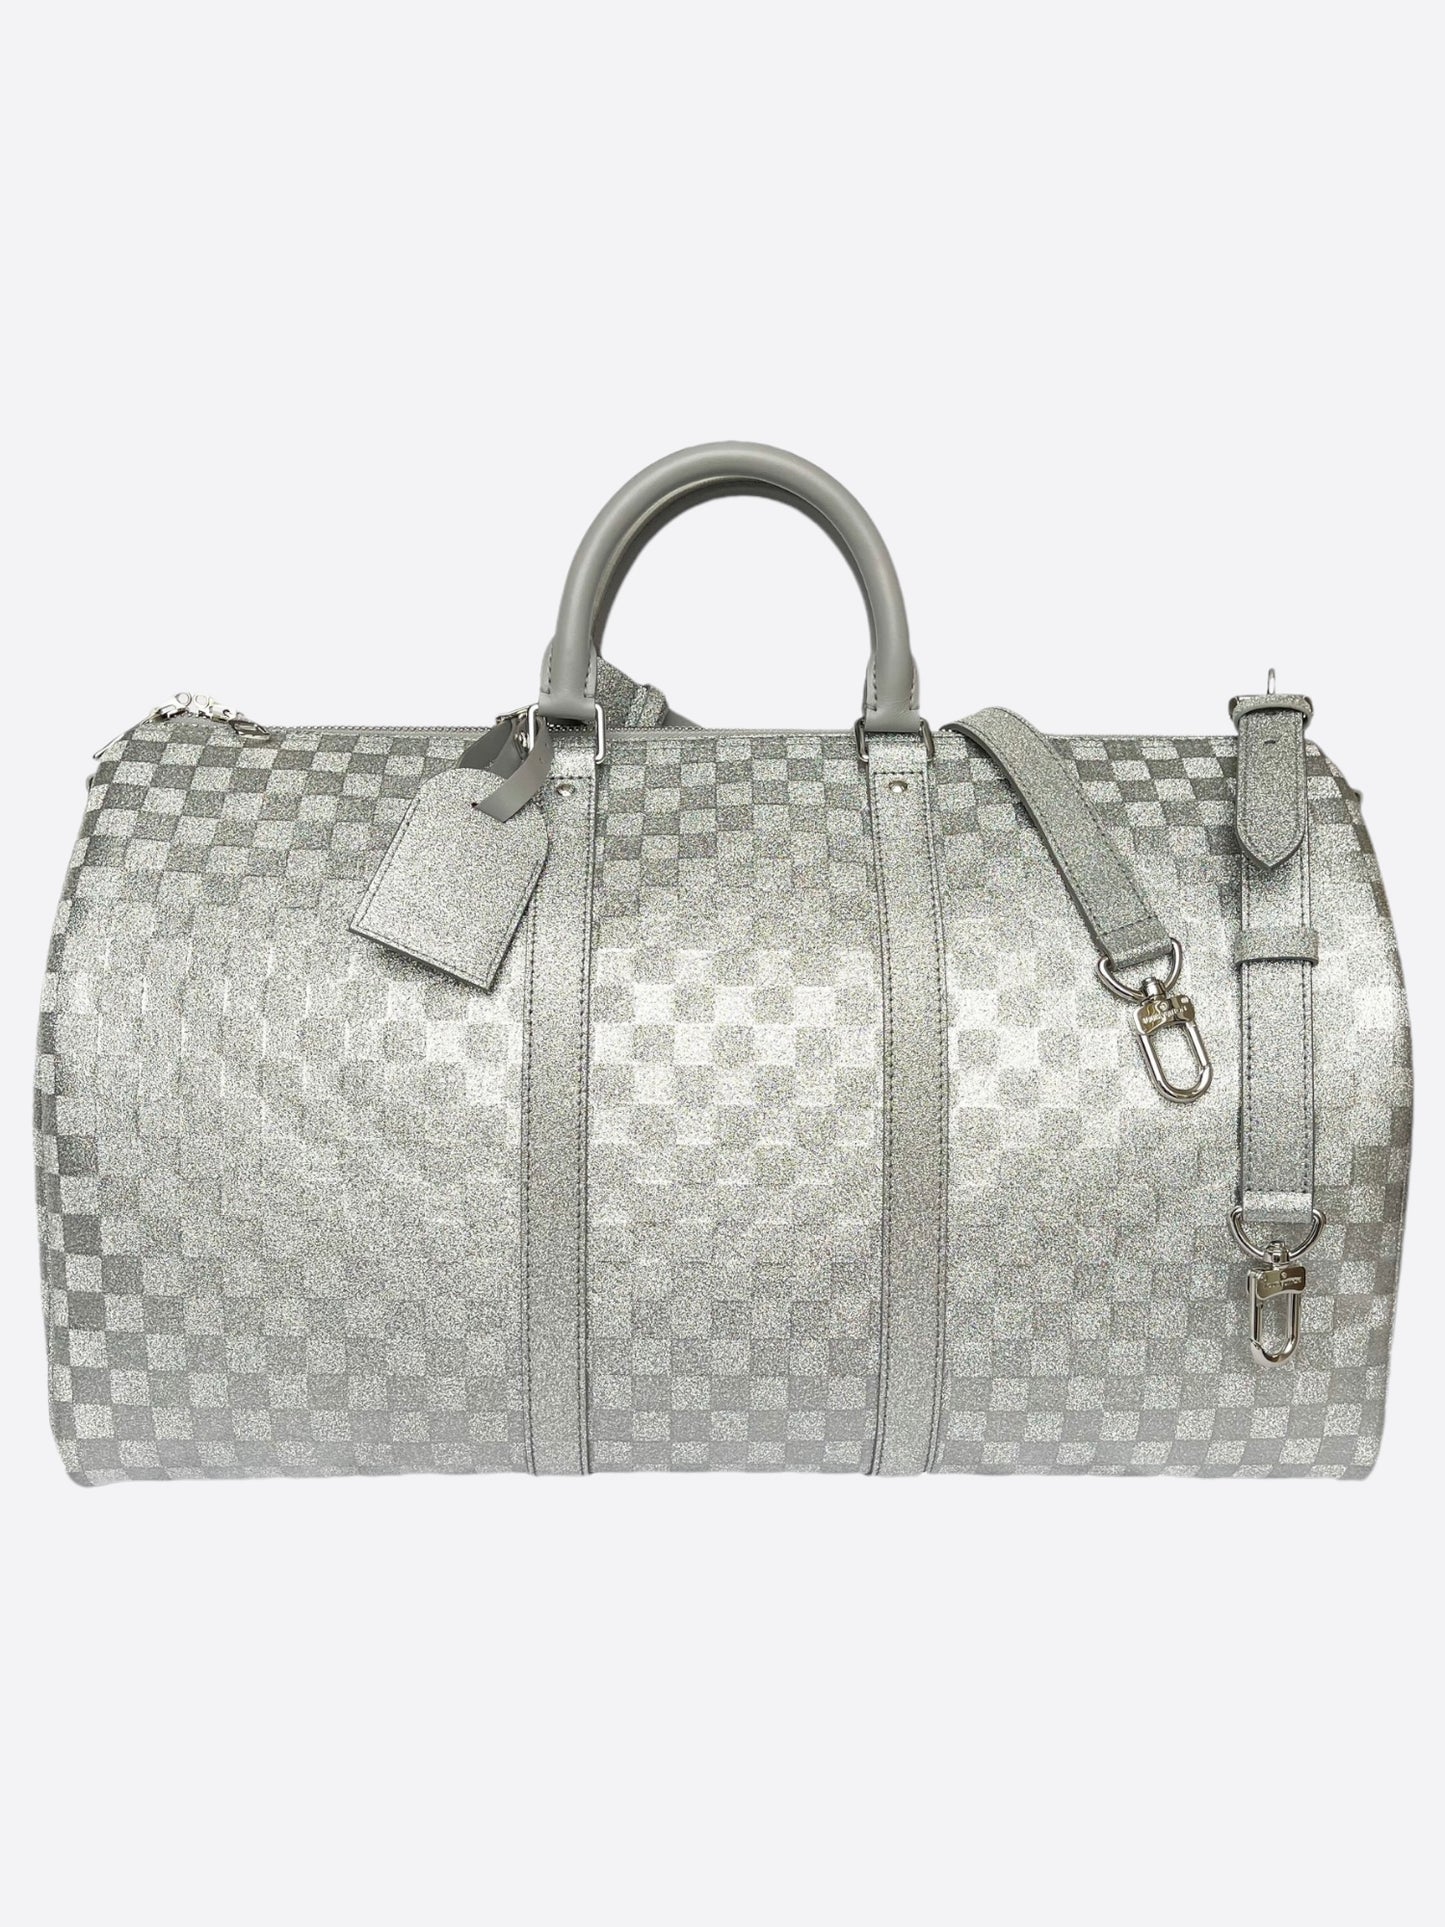 Louis Vuitton Keepall Bandouliere 50 Silver Glitter Damier Weekend Travel  Bag